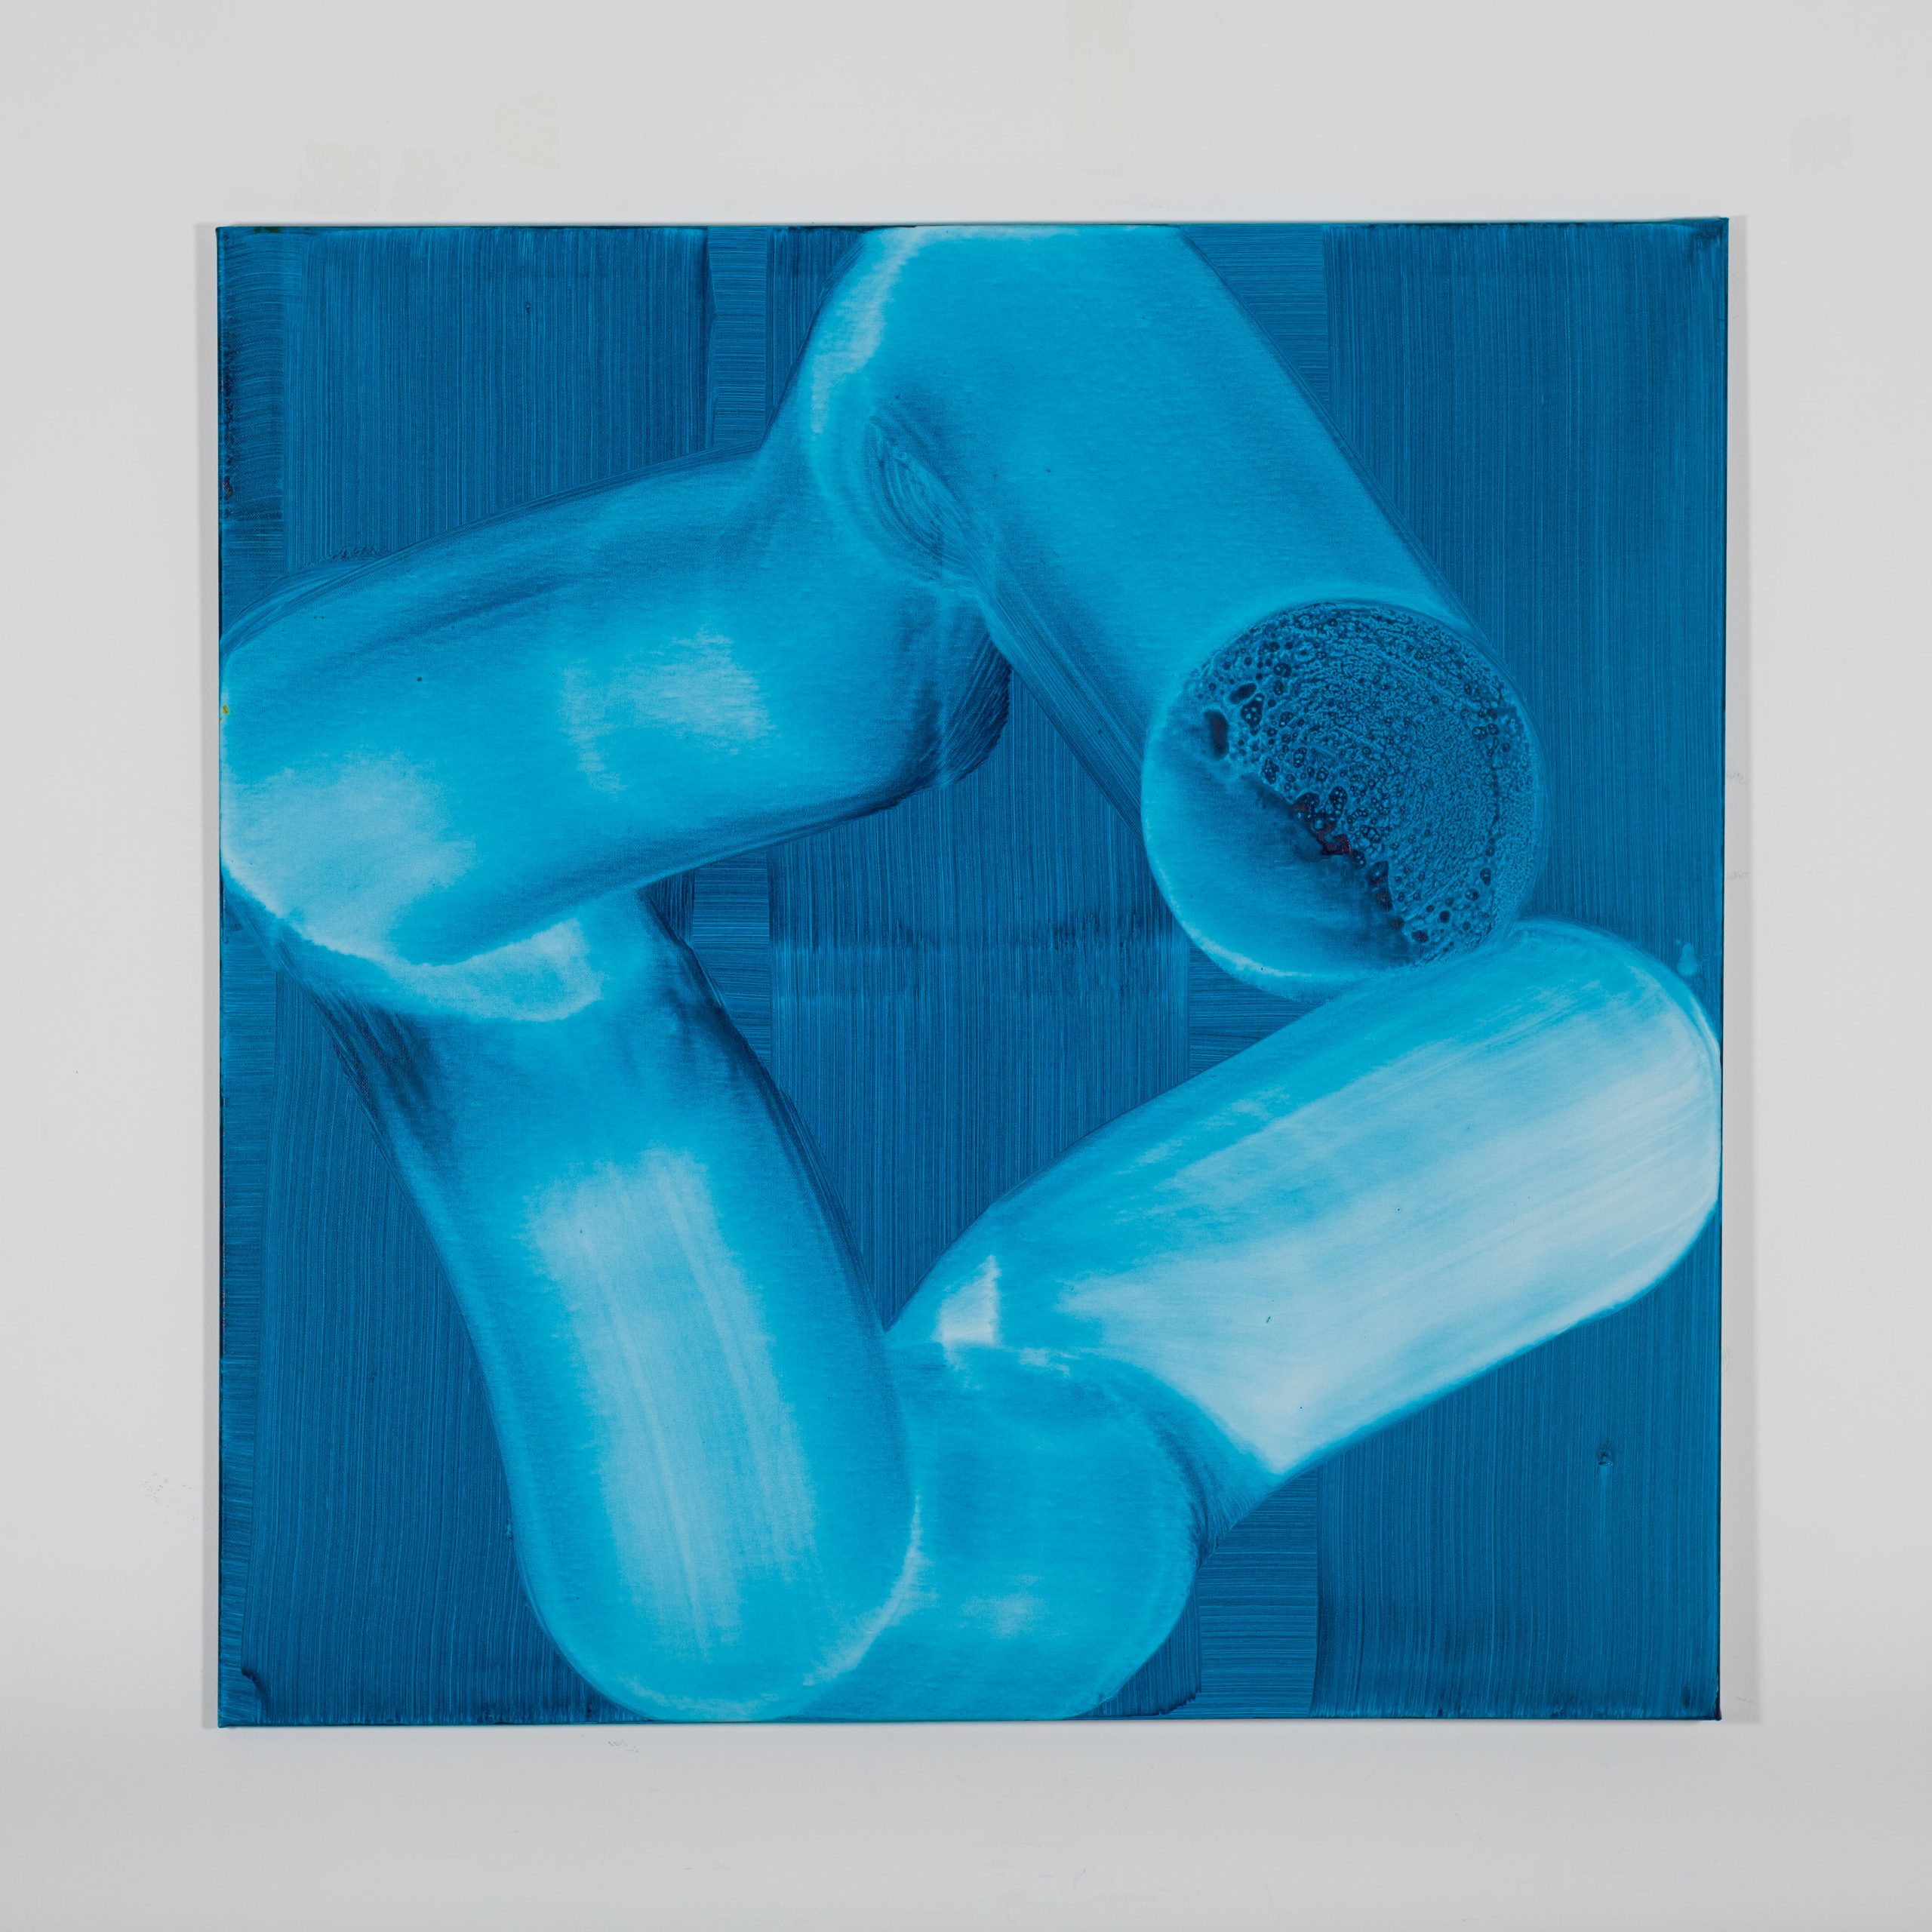 Stanislav Ondruš “Floating movement” 2022 100 cm x 100 cm acrylic on canvas